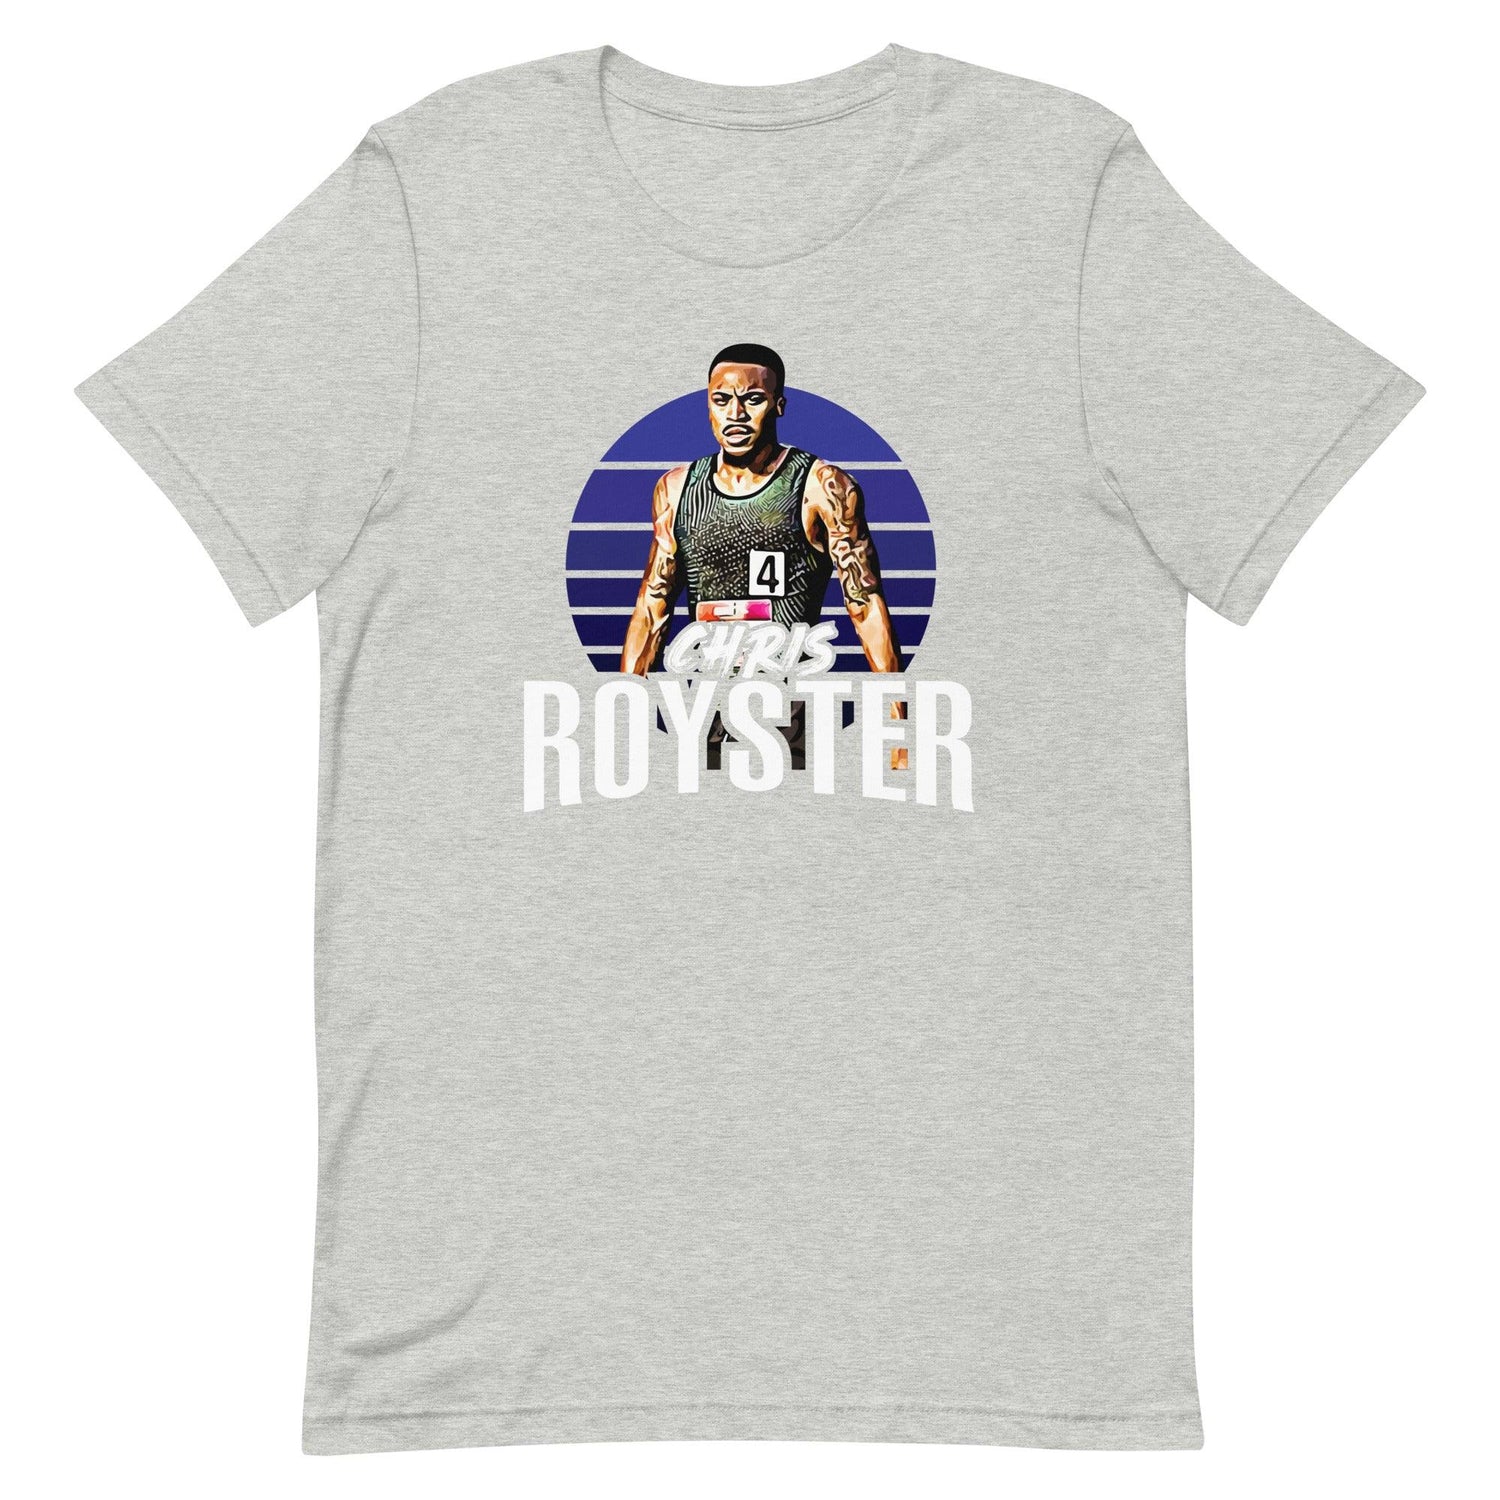 Chris Royster "Race Ready" t-shirt - Fan Arch